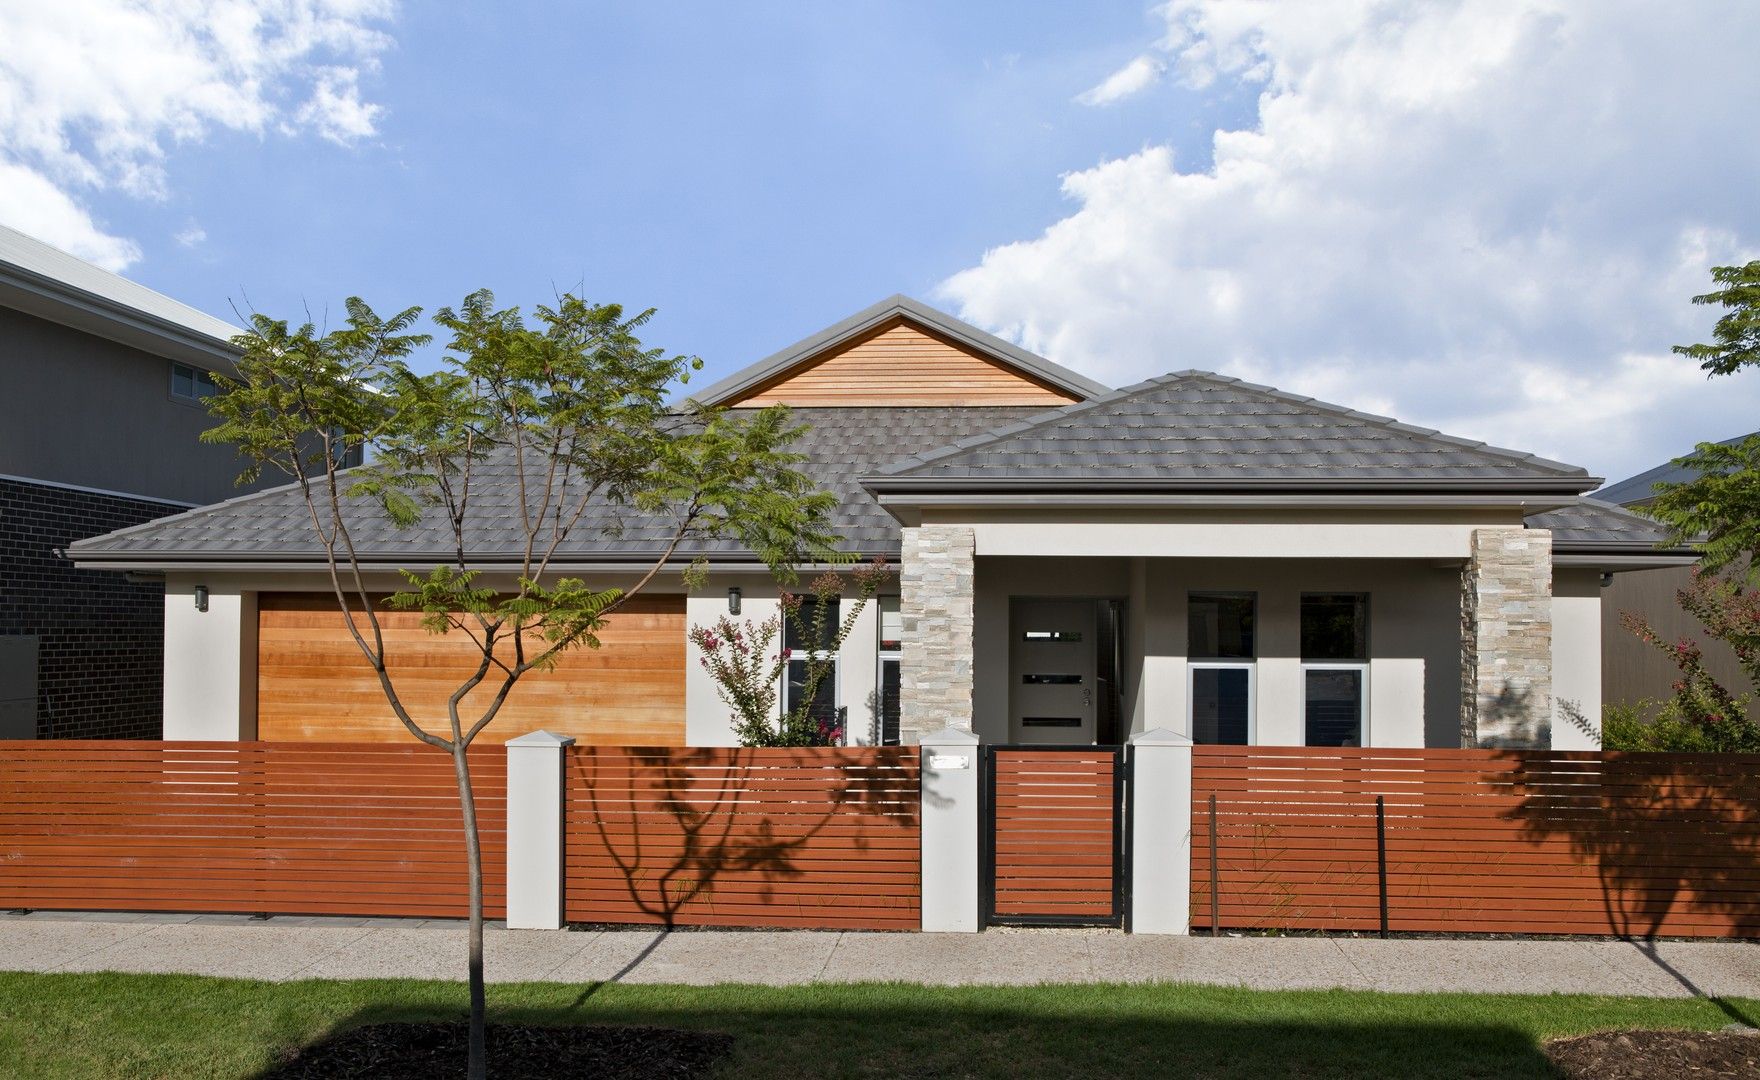 4 bedrooms New House & Land in Lot 35,29 Daranda Terrace MILANG SA, 5256